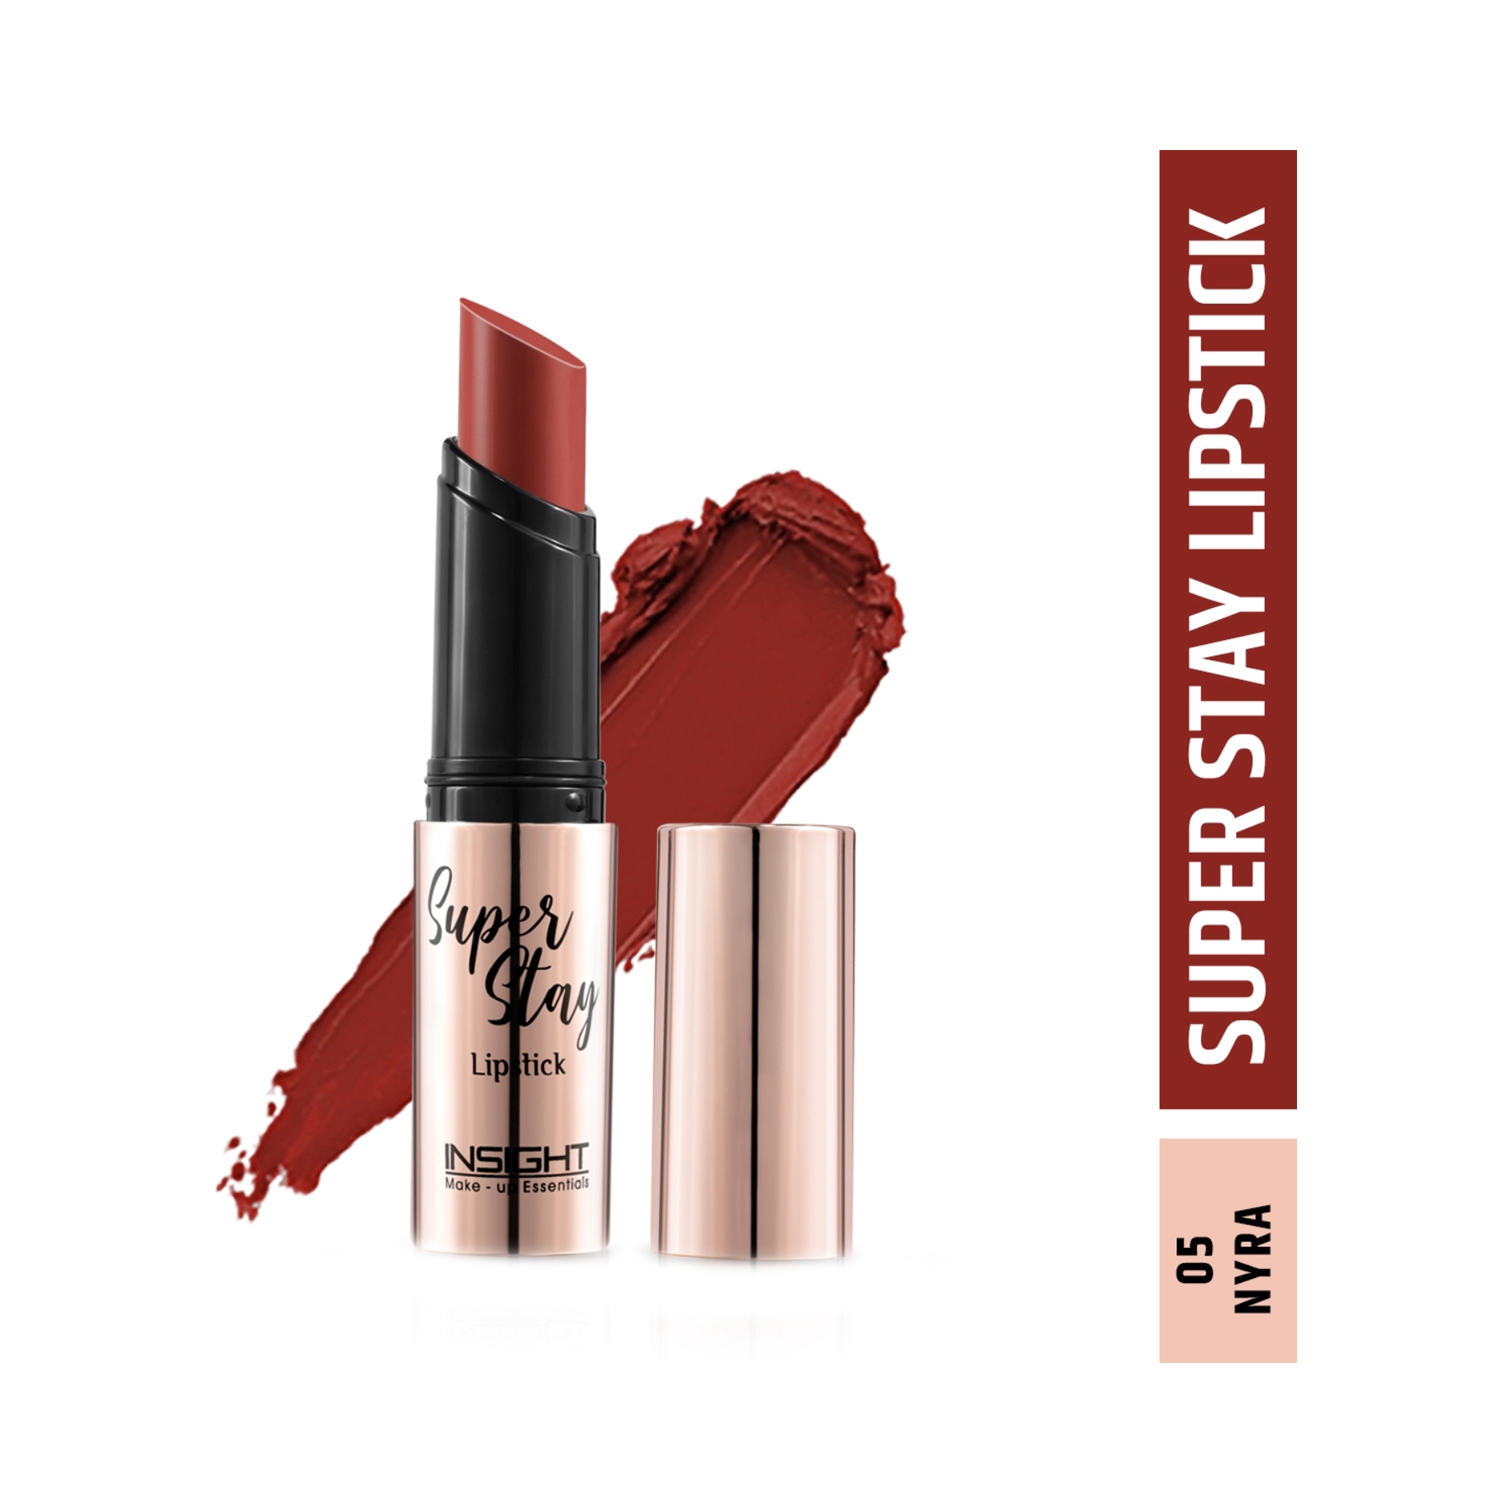 Insight Cosmetics | Insight Cosmetics Super Stay Lipstick - 05 Nyra (7g)